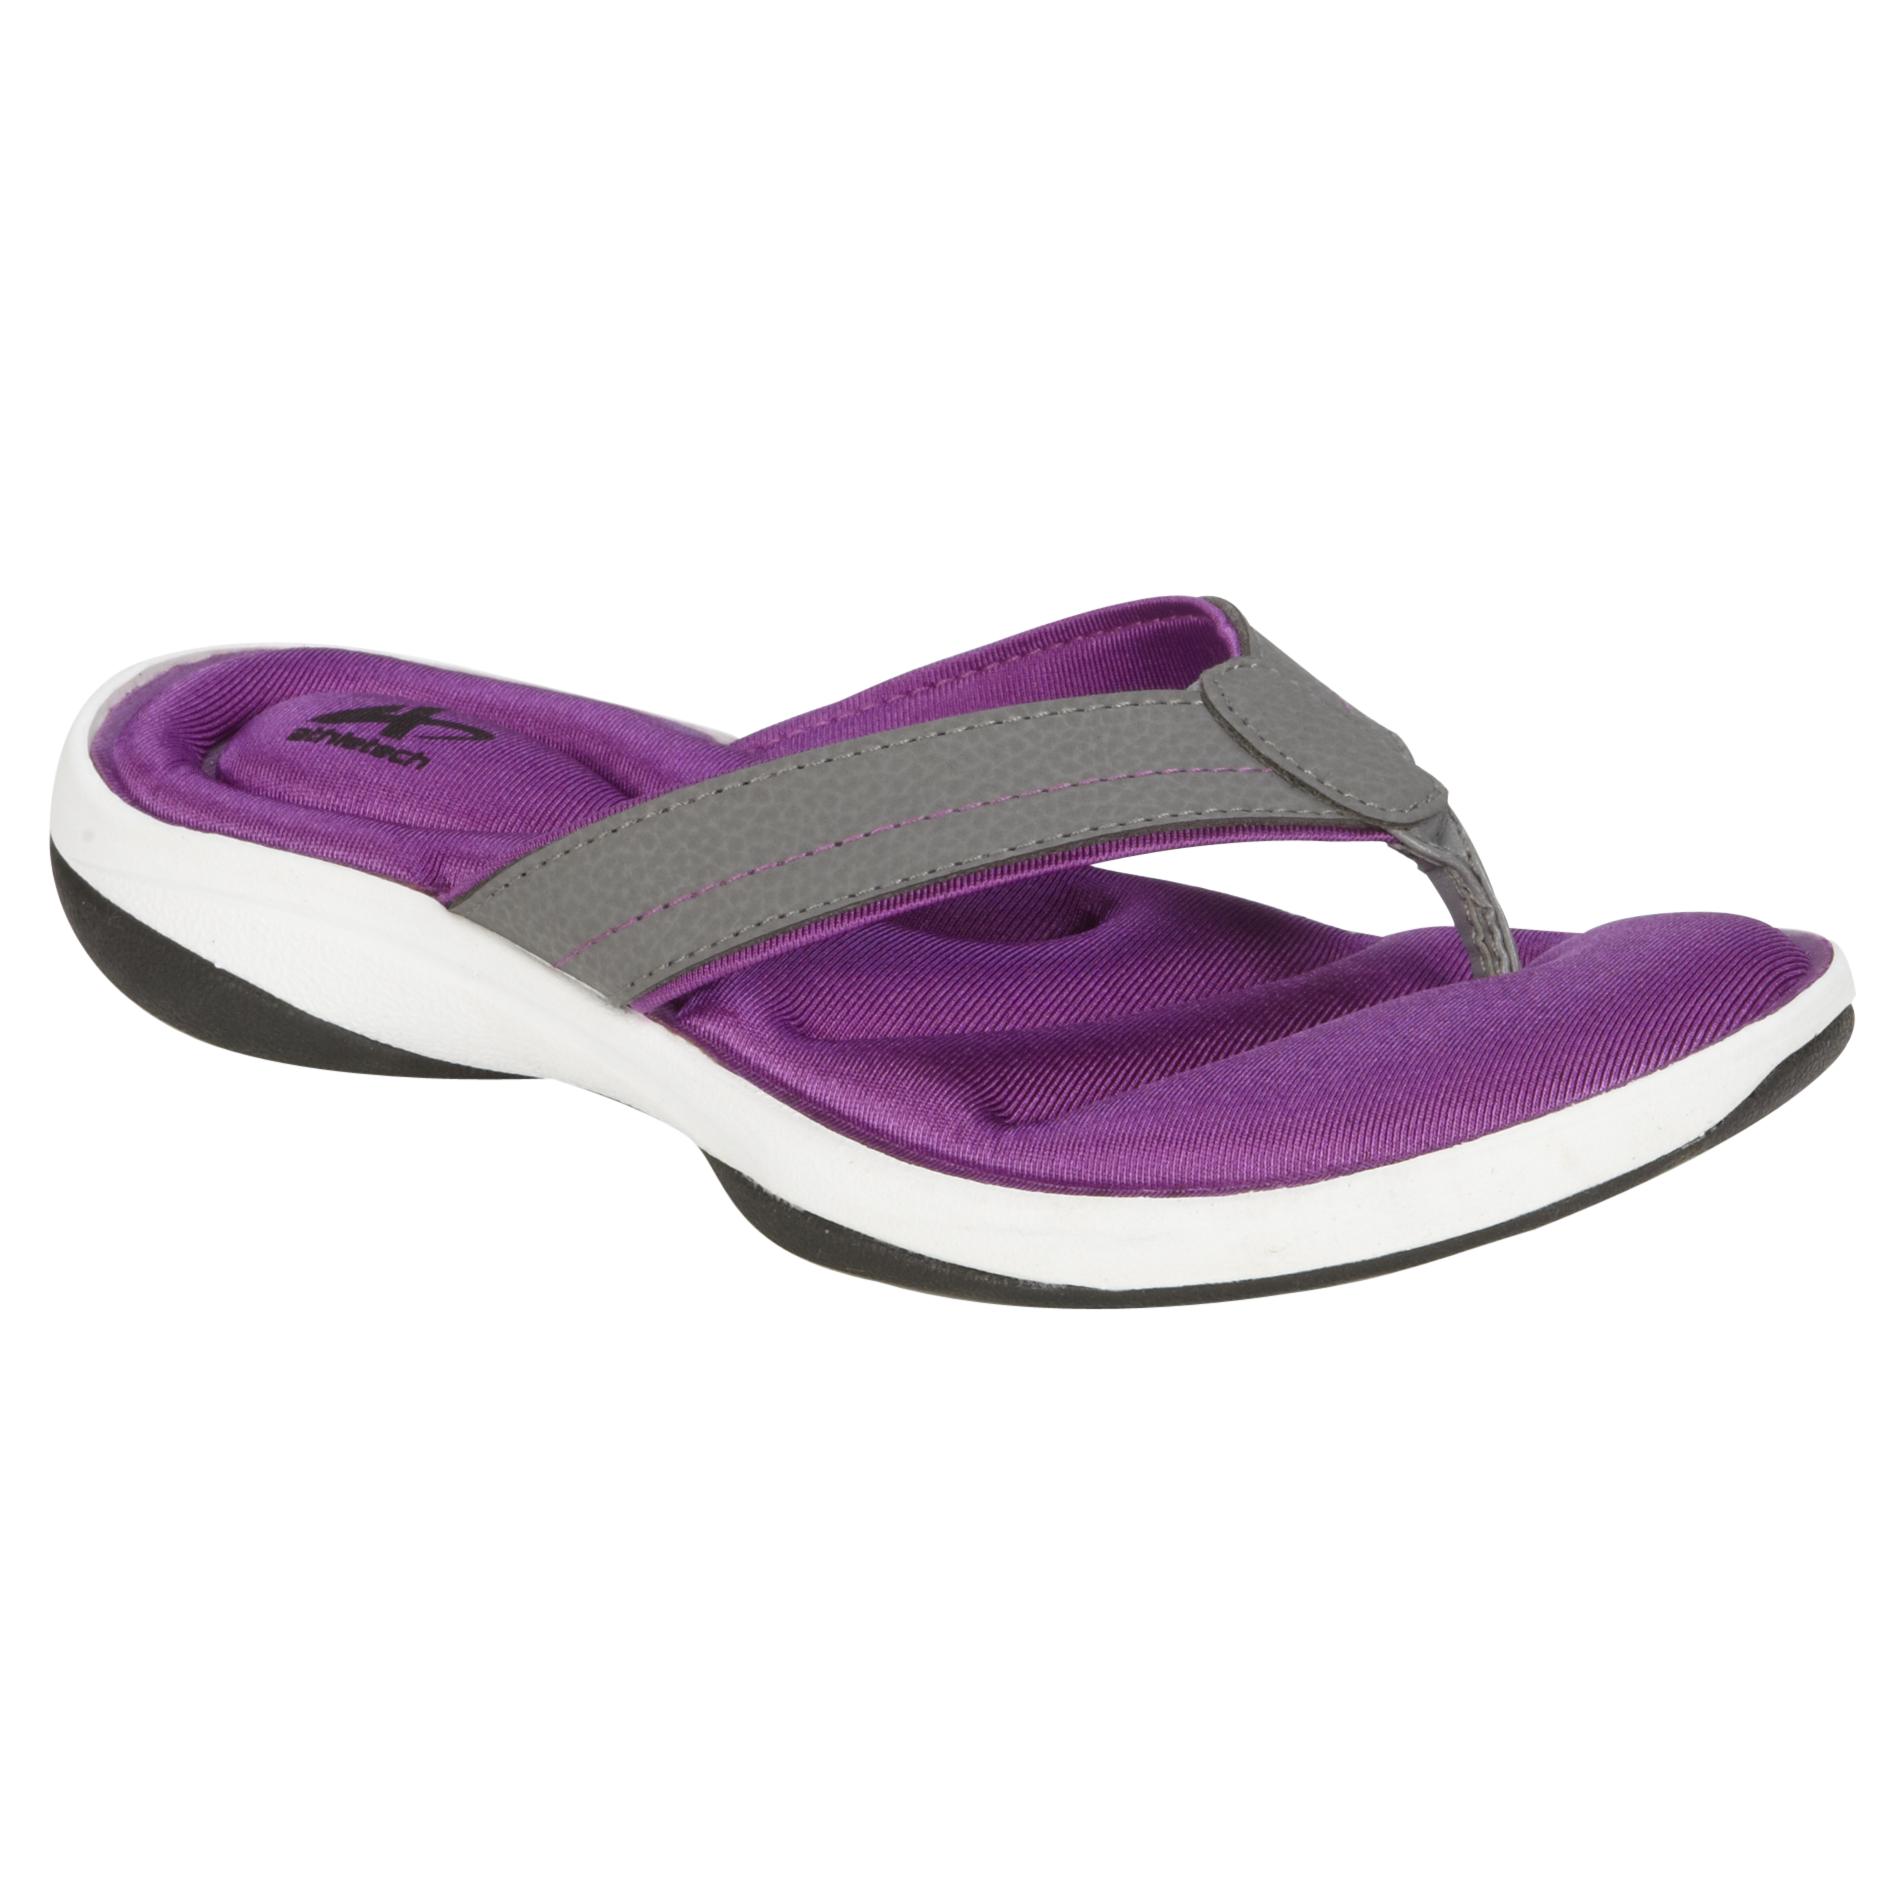 Athletech Women's Sandal Zippy - Purple